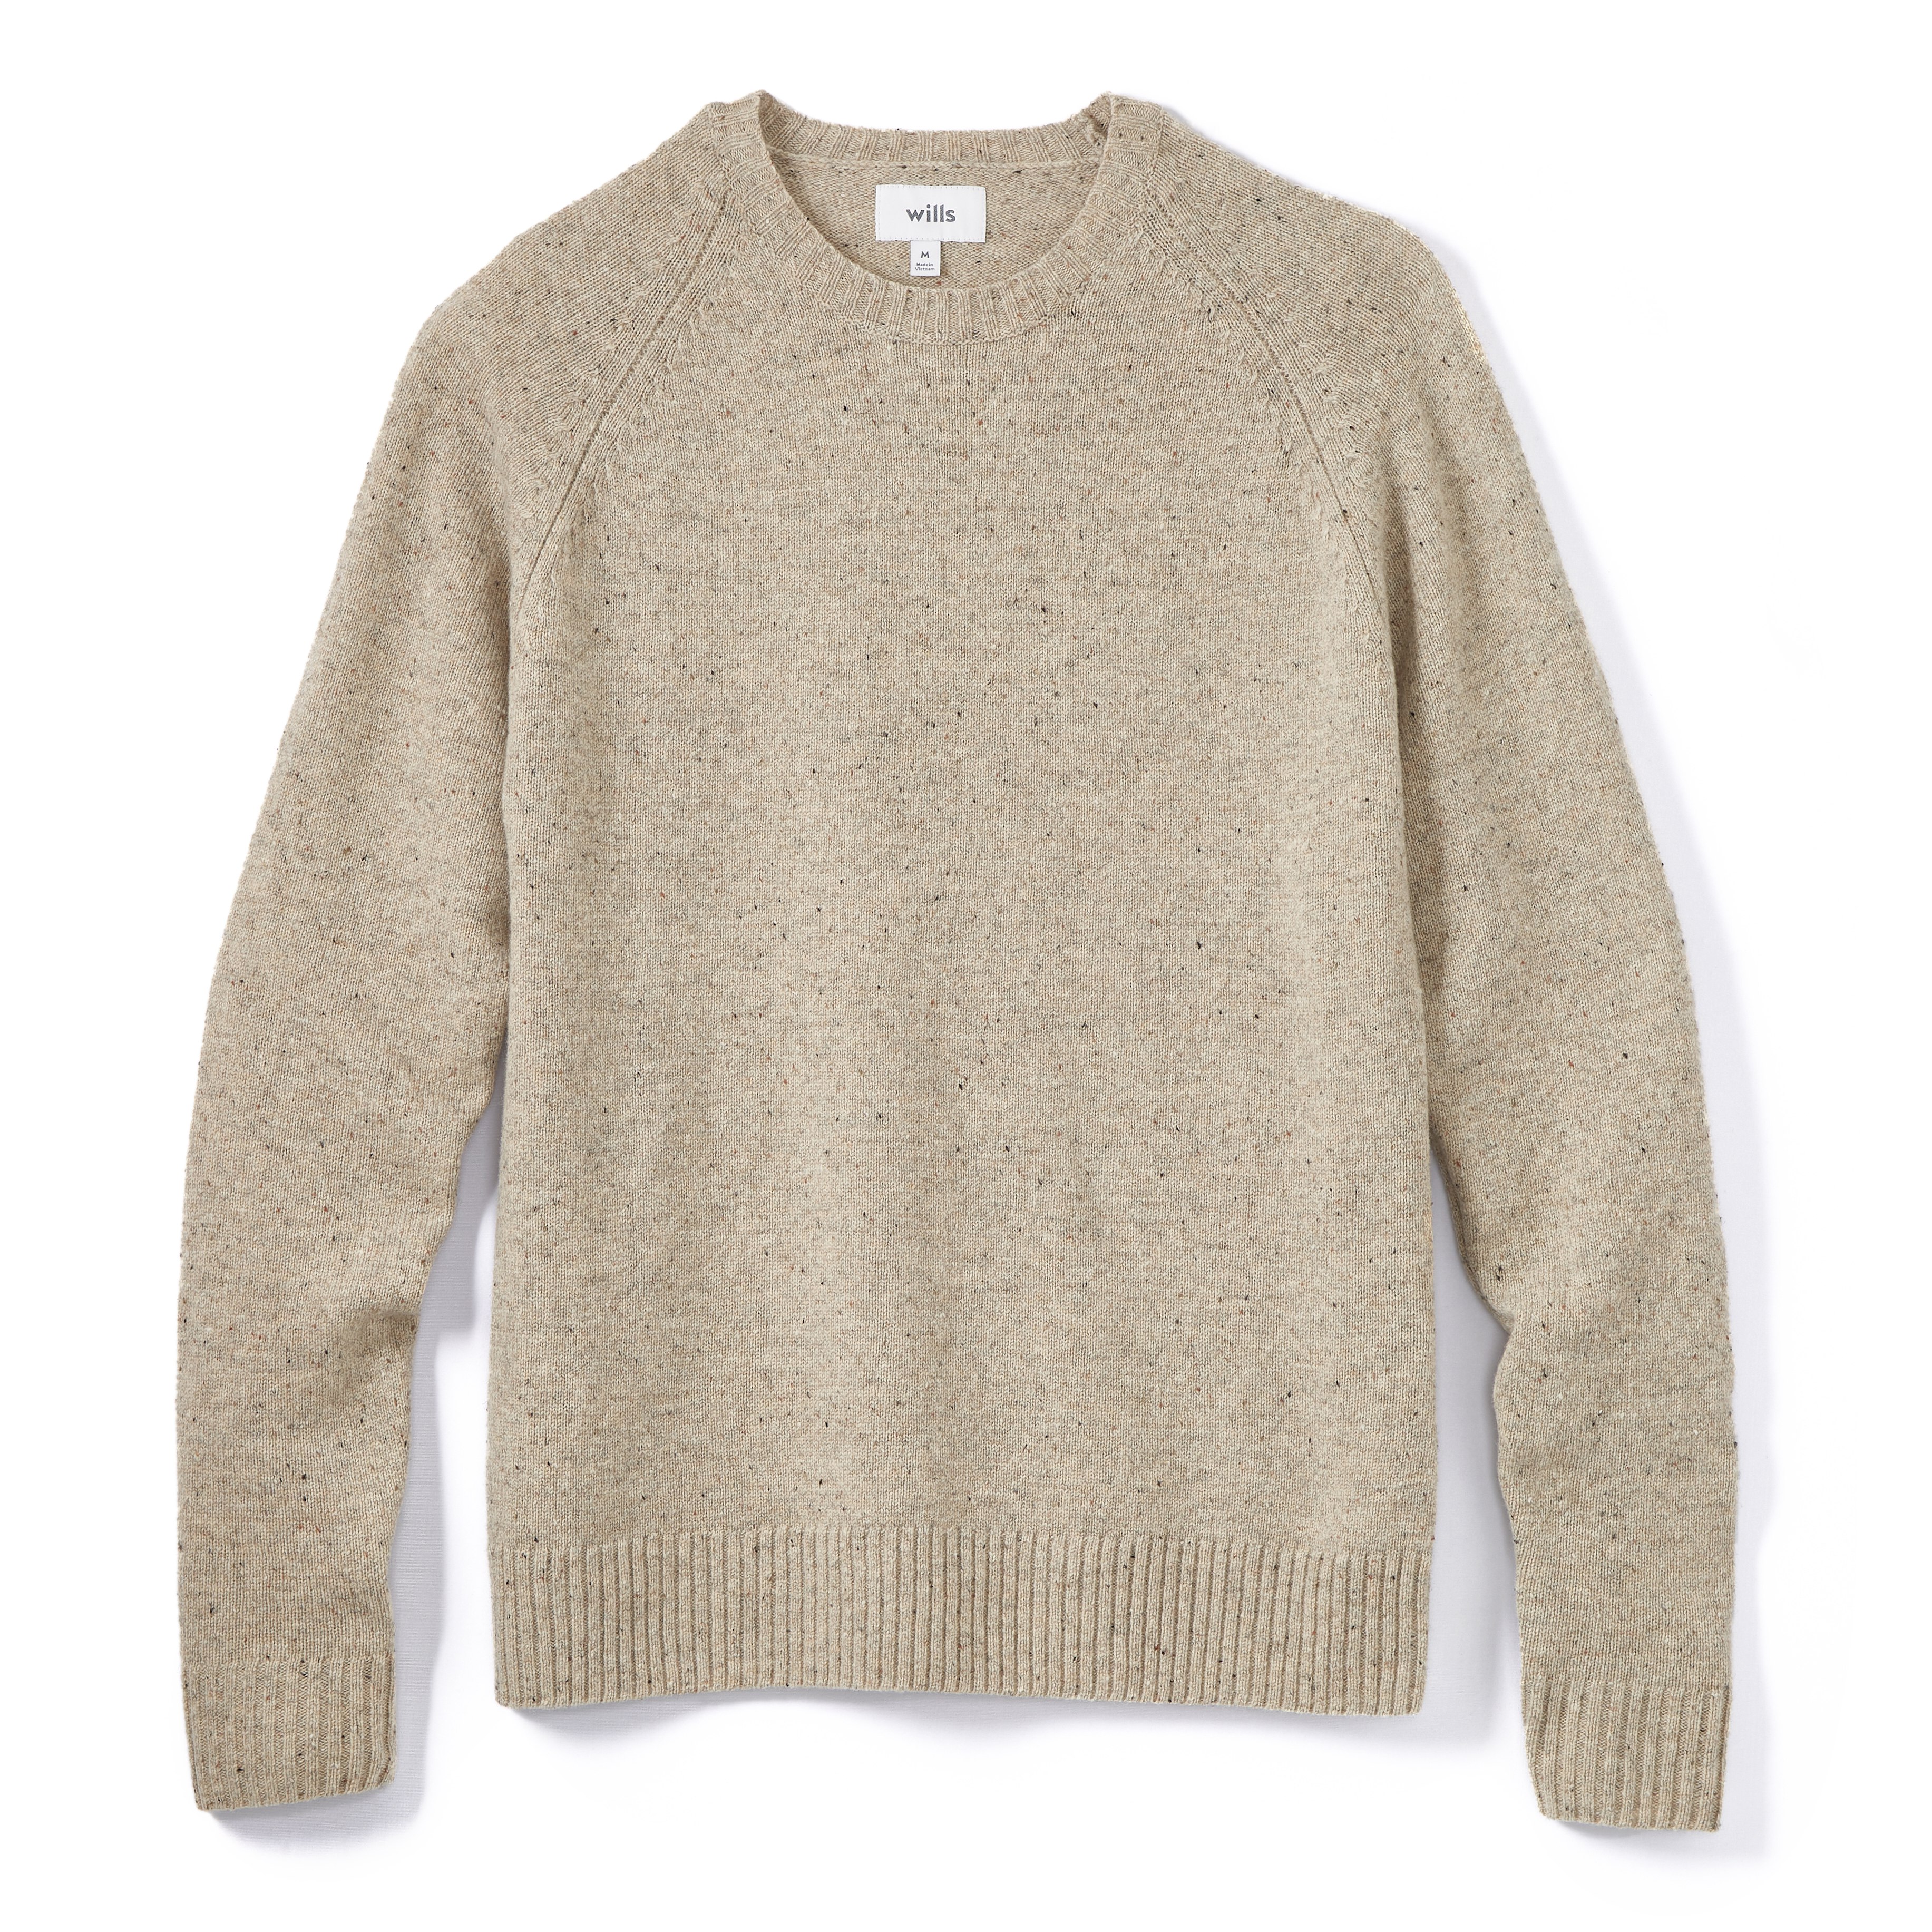 Wills Speckled Merino Wool Crewneck Sweater - Oatmeal | Crew Neck